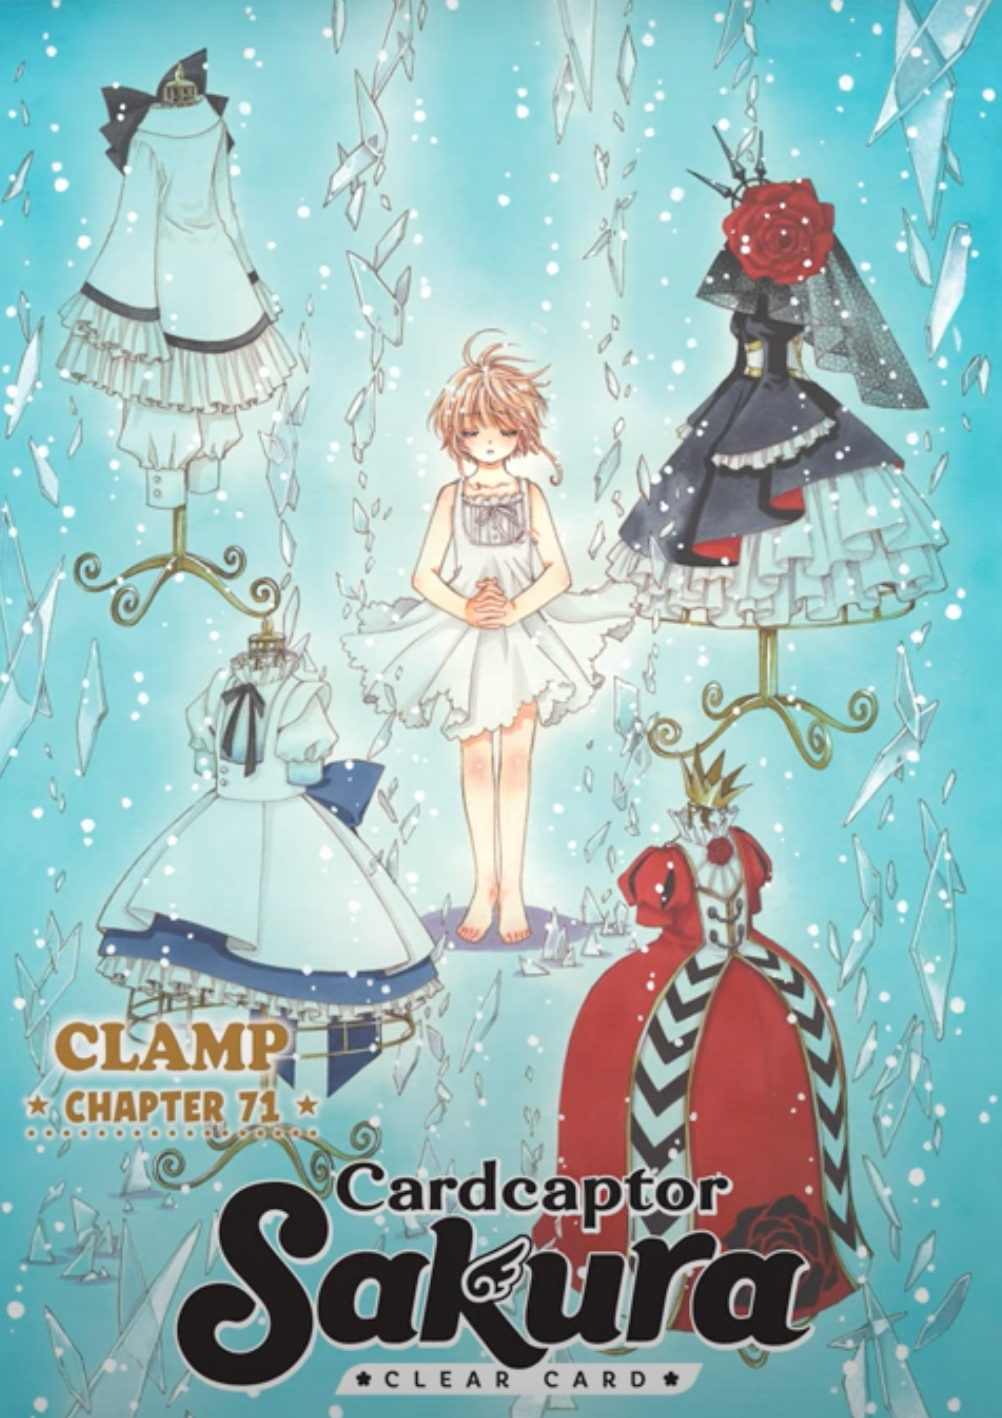 Cardcaptor Sakura - Clear Card Arc 7 Page 1  Cardcaptor sakura, Sakura card,  Clear card